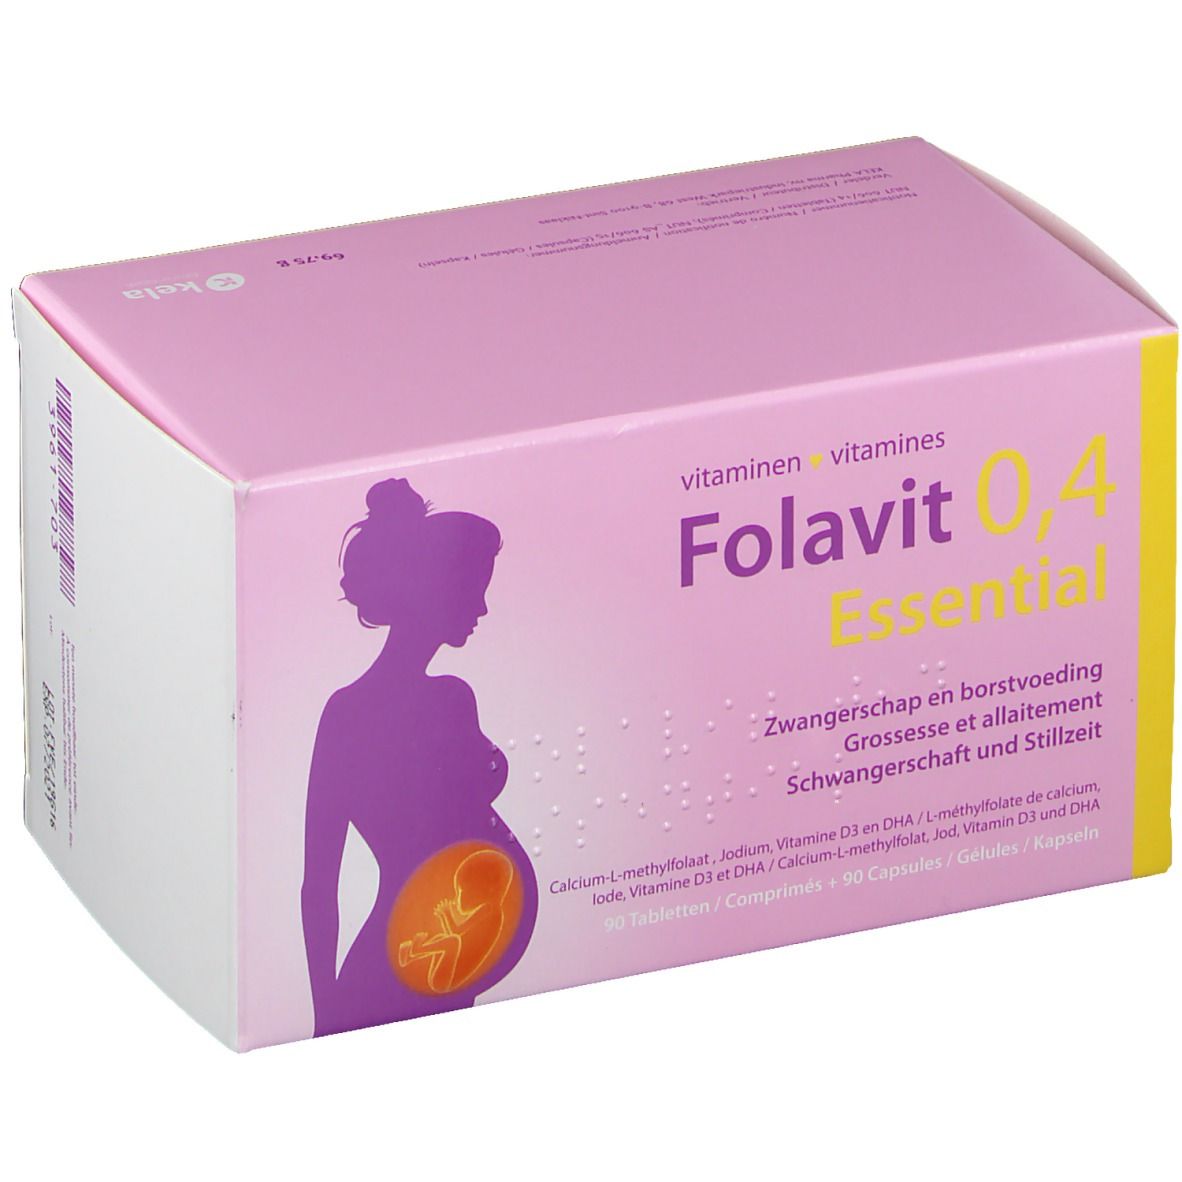 Image of Folavit 0,4 Essential